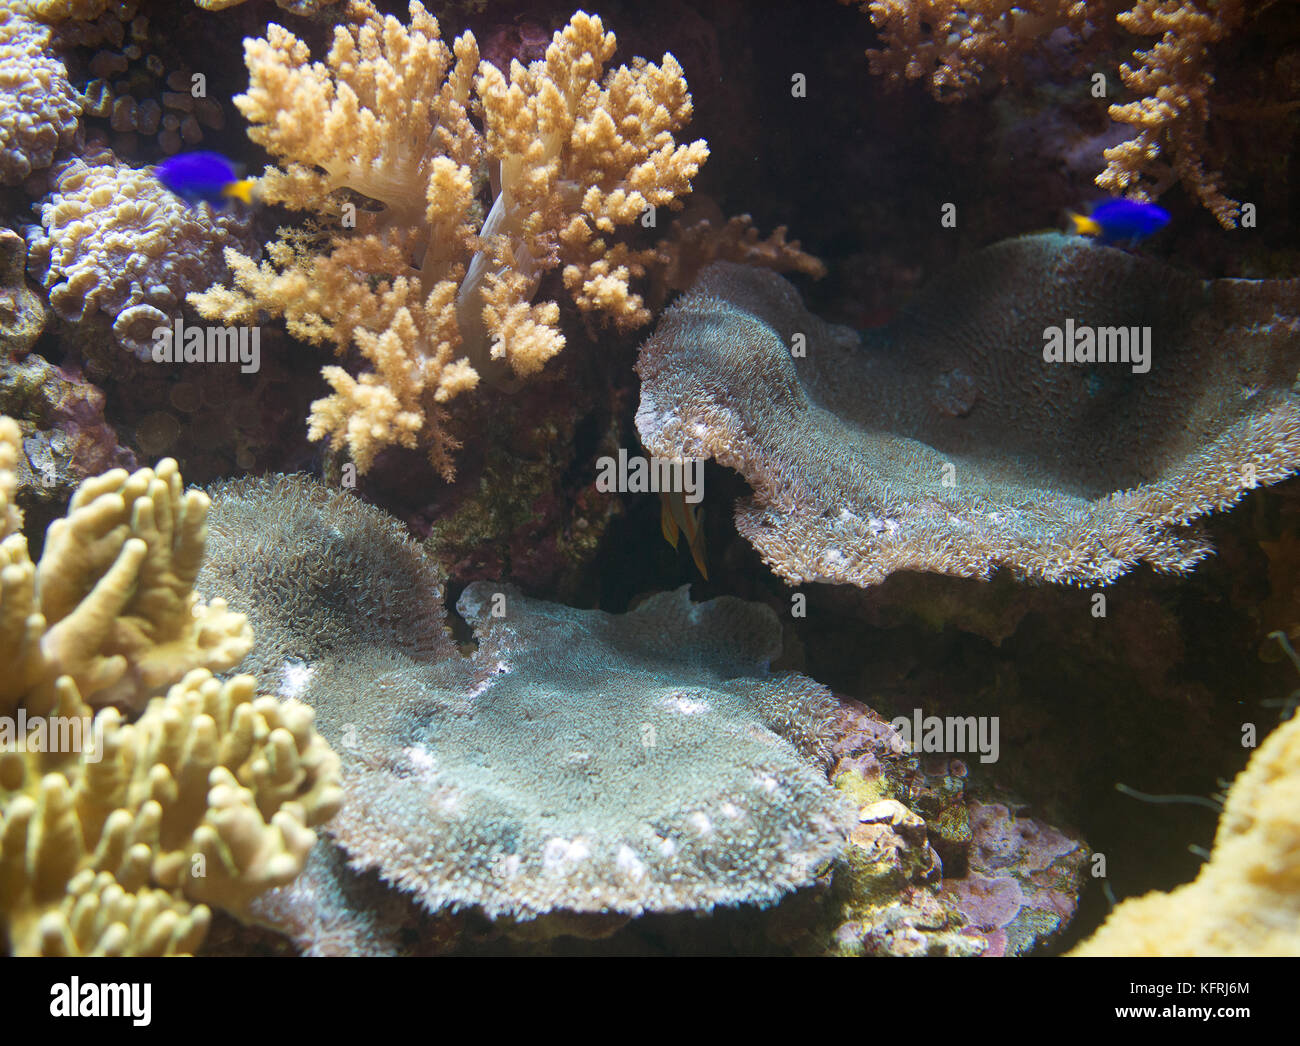 Ruffled Ridge Coral in the sea. Merulina sp. Stock Photo